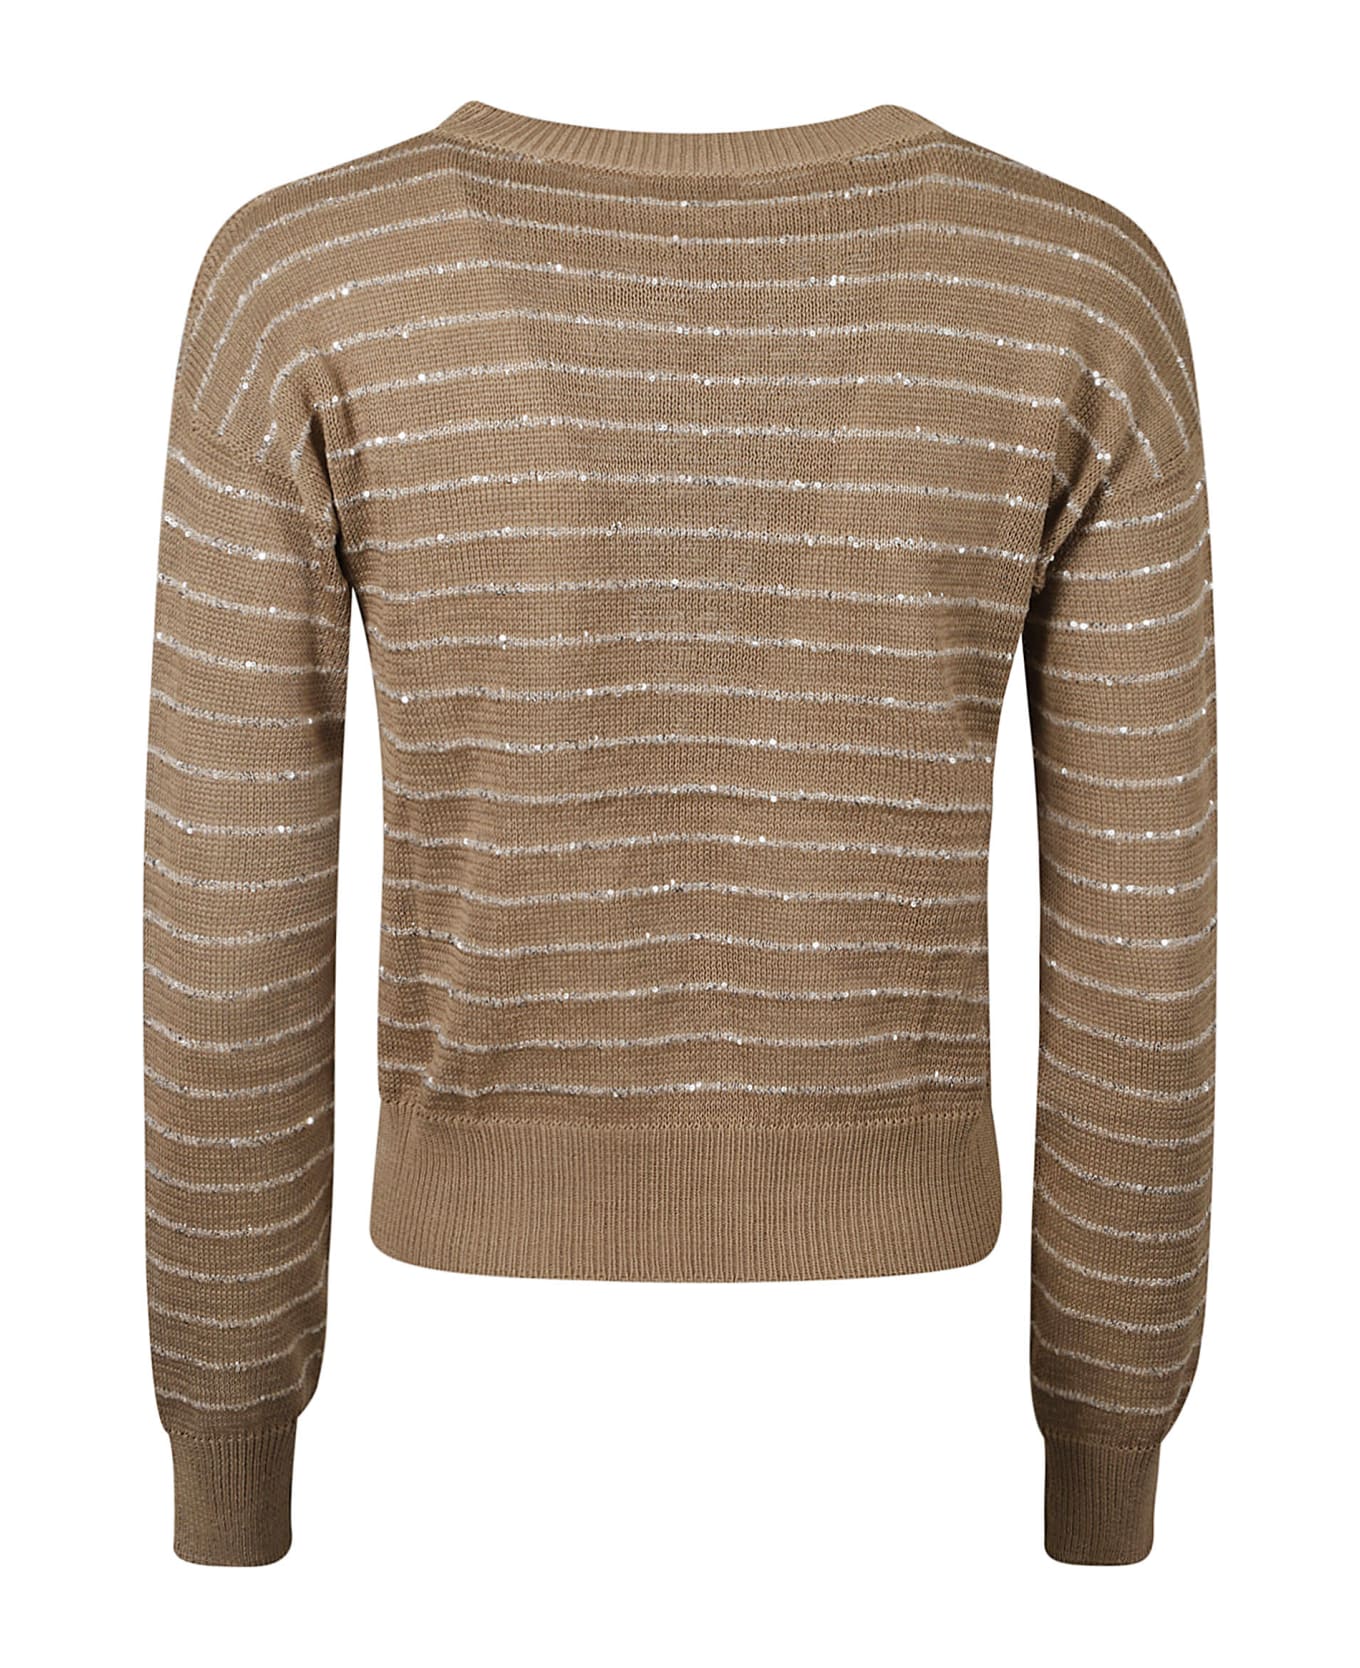 Brunello Cucinelli Glittery Striped Sweater - wheat stalk ニットウェア